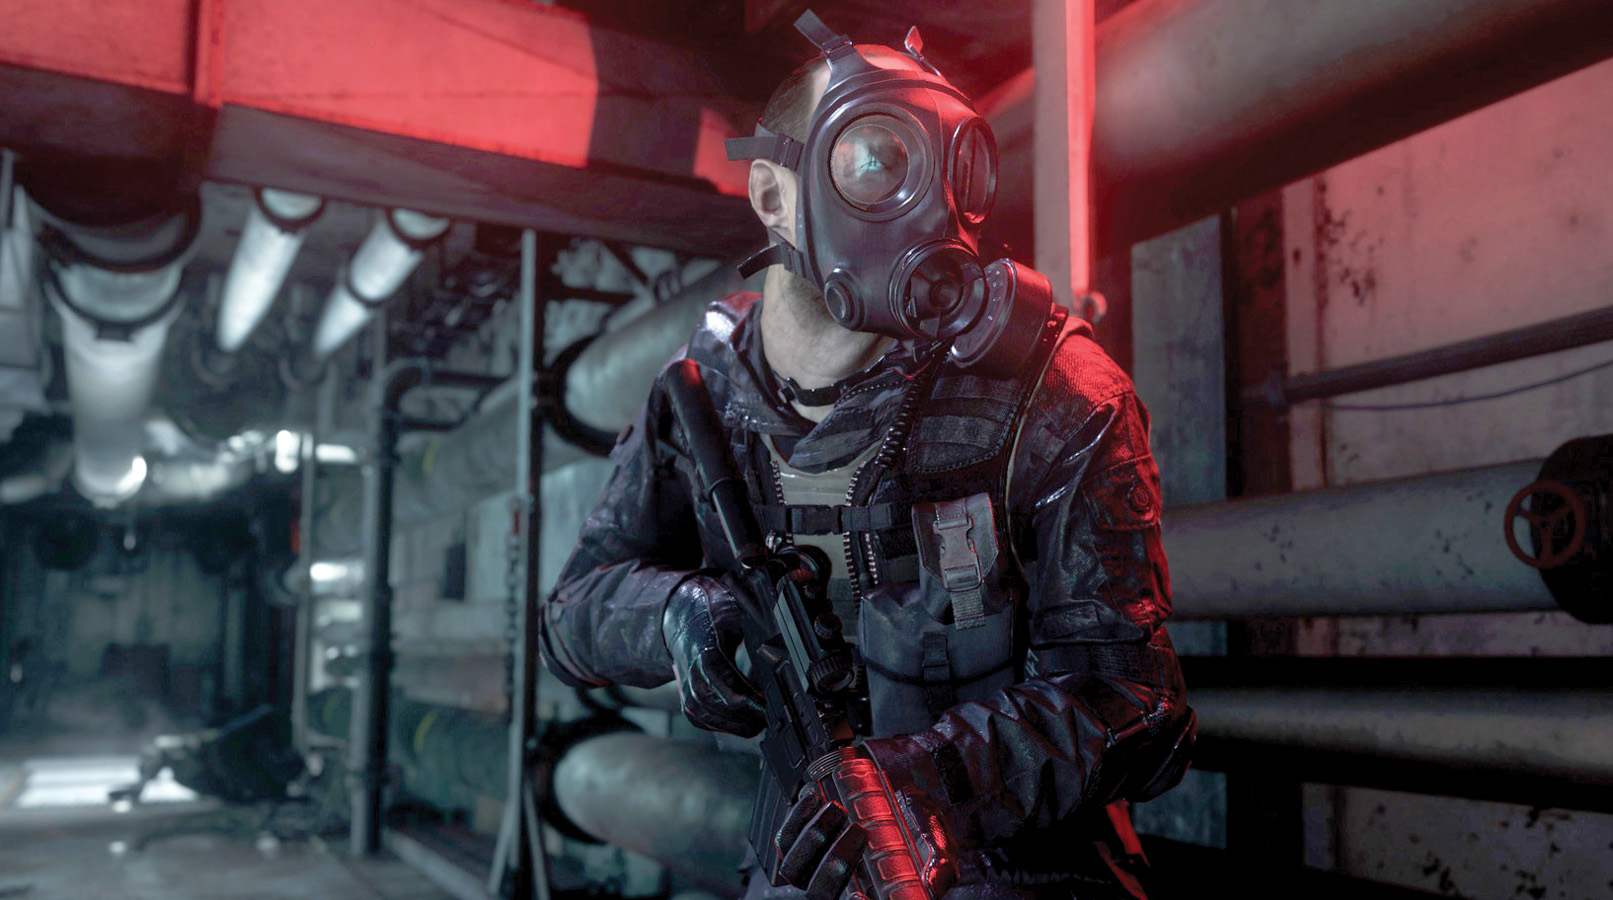 Review: Call of Duty: Modern Warfare